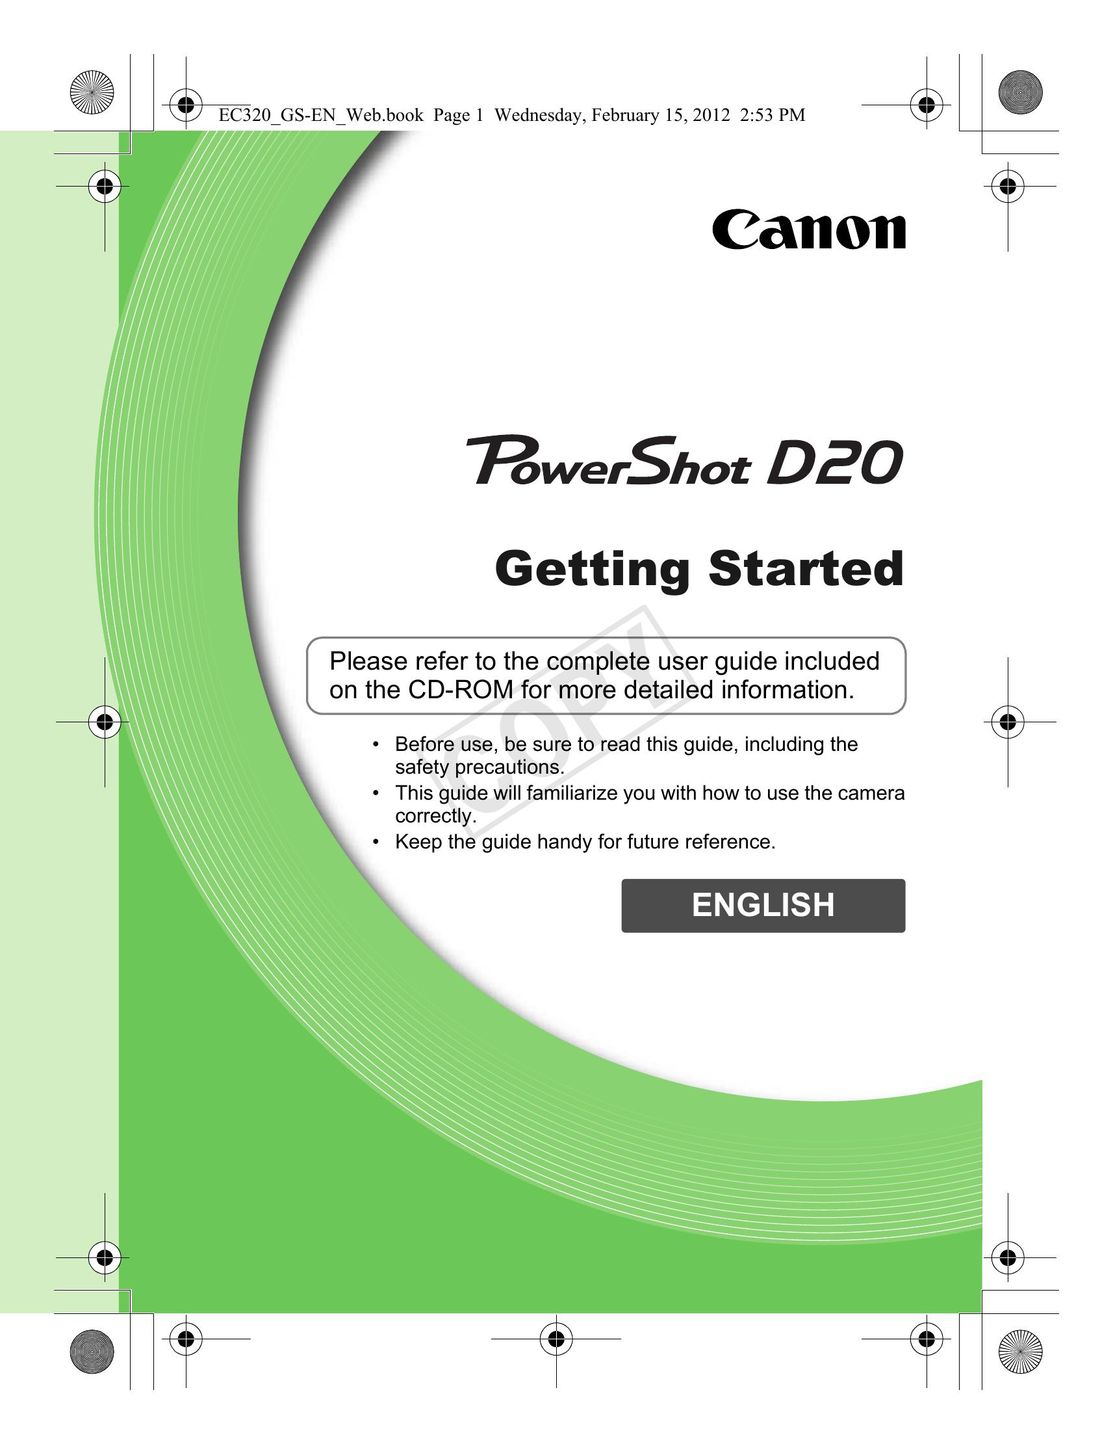 Canon D20 Webcam User Manual